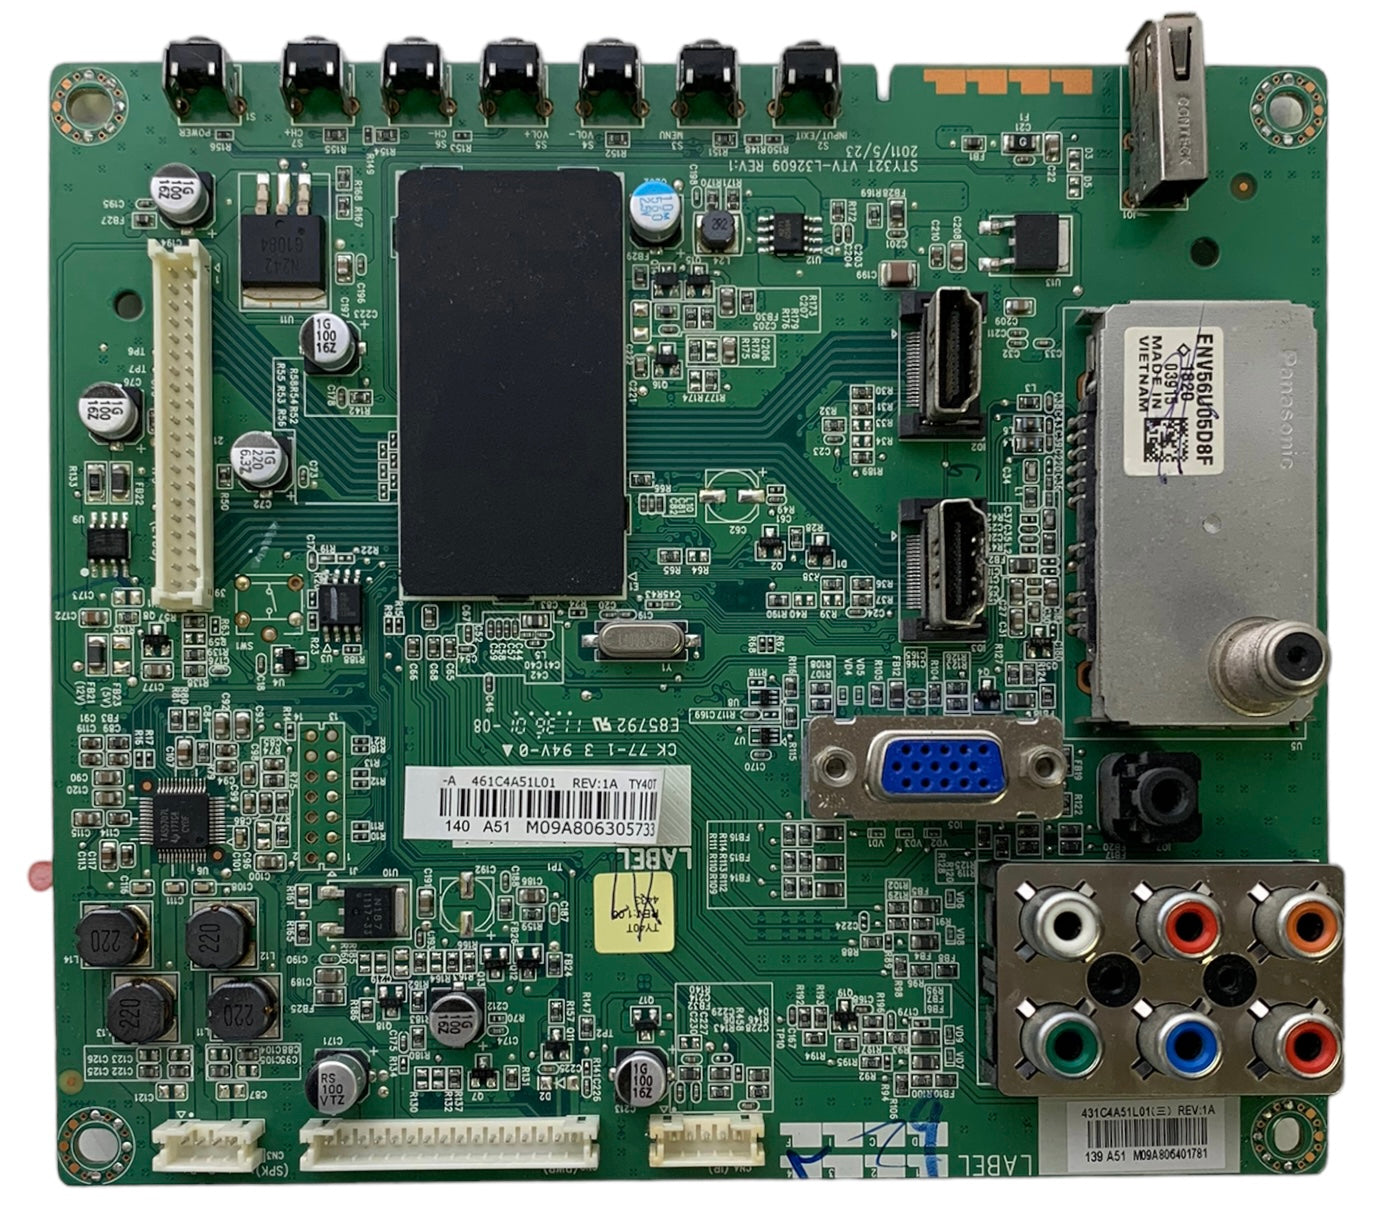 Toshiba 75025867 Main Board for 40FT2U